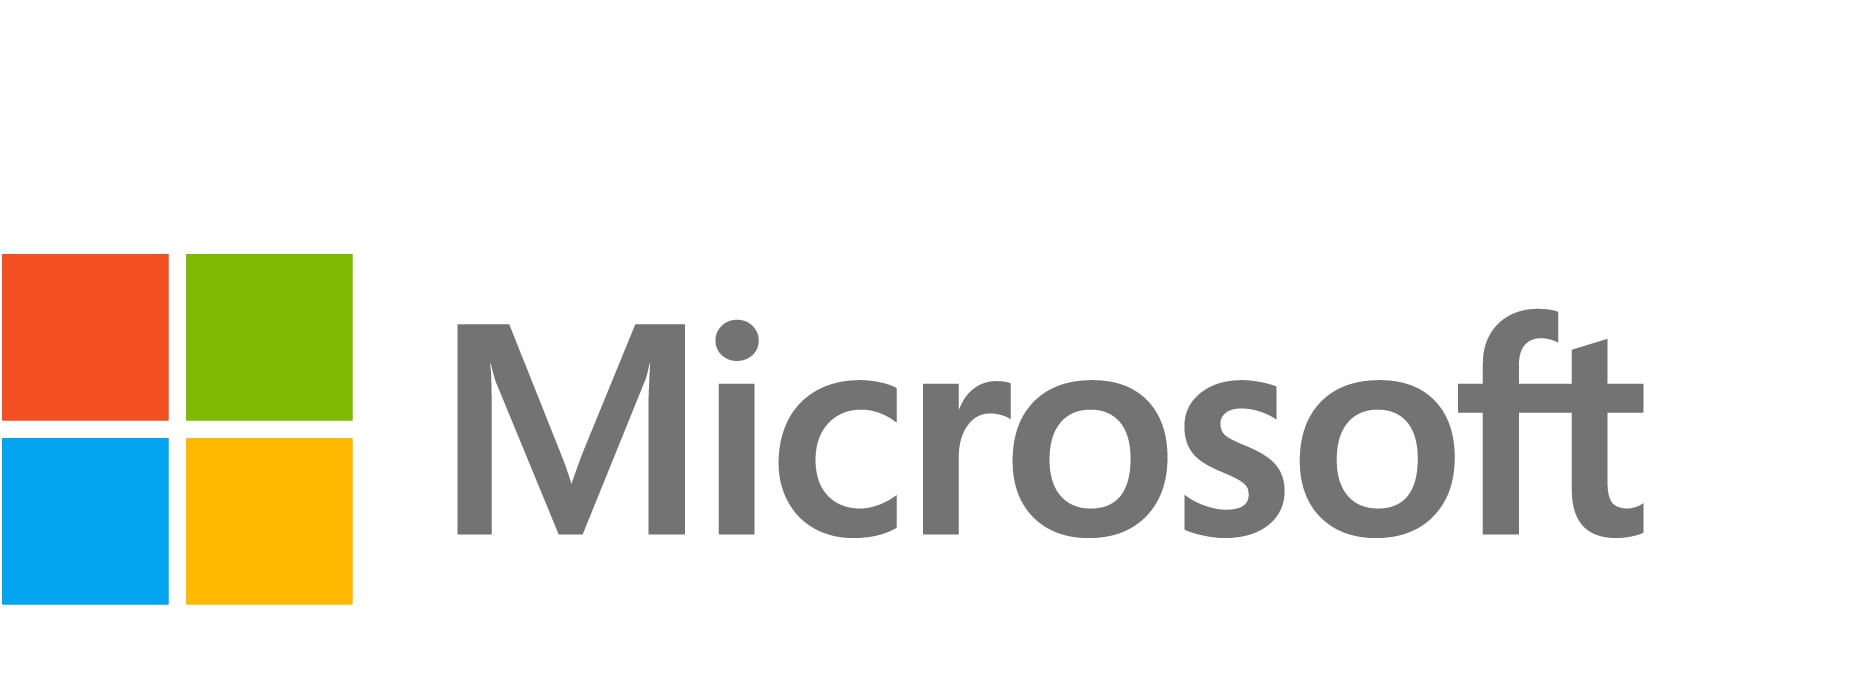 Microsoft Office 365 E5 - Enterprise Plan 5 Software Subscription (Teams Included) Subscription